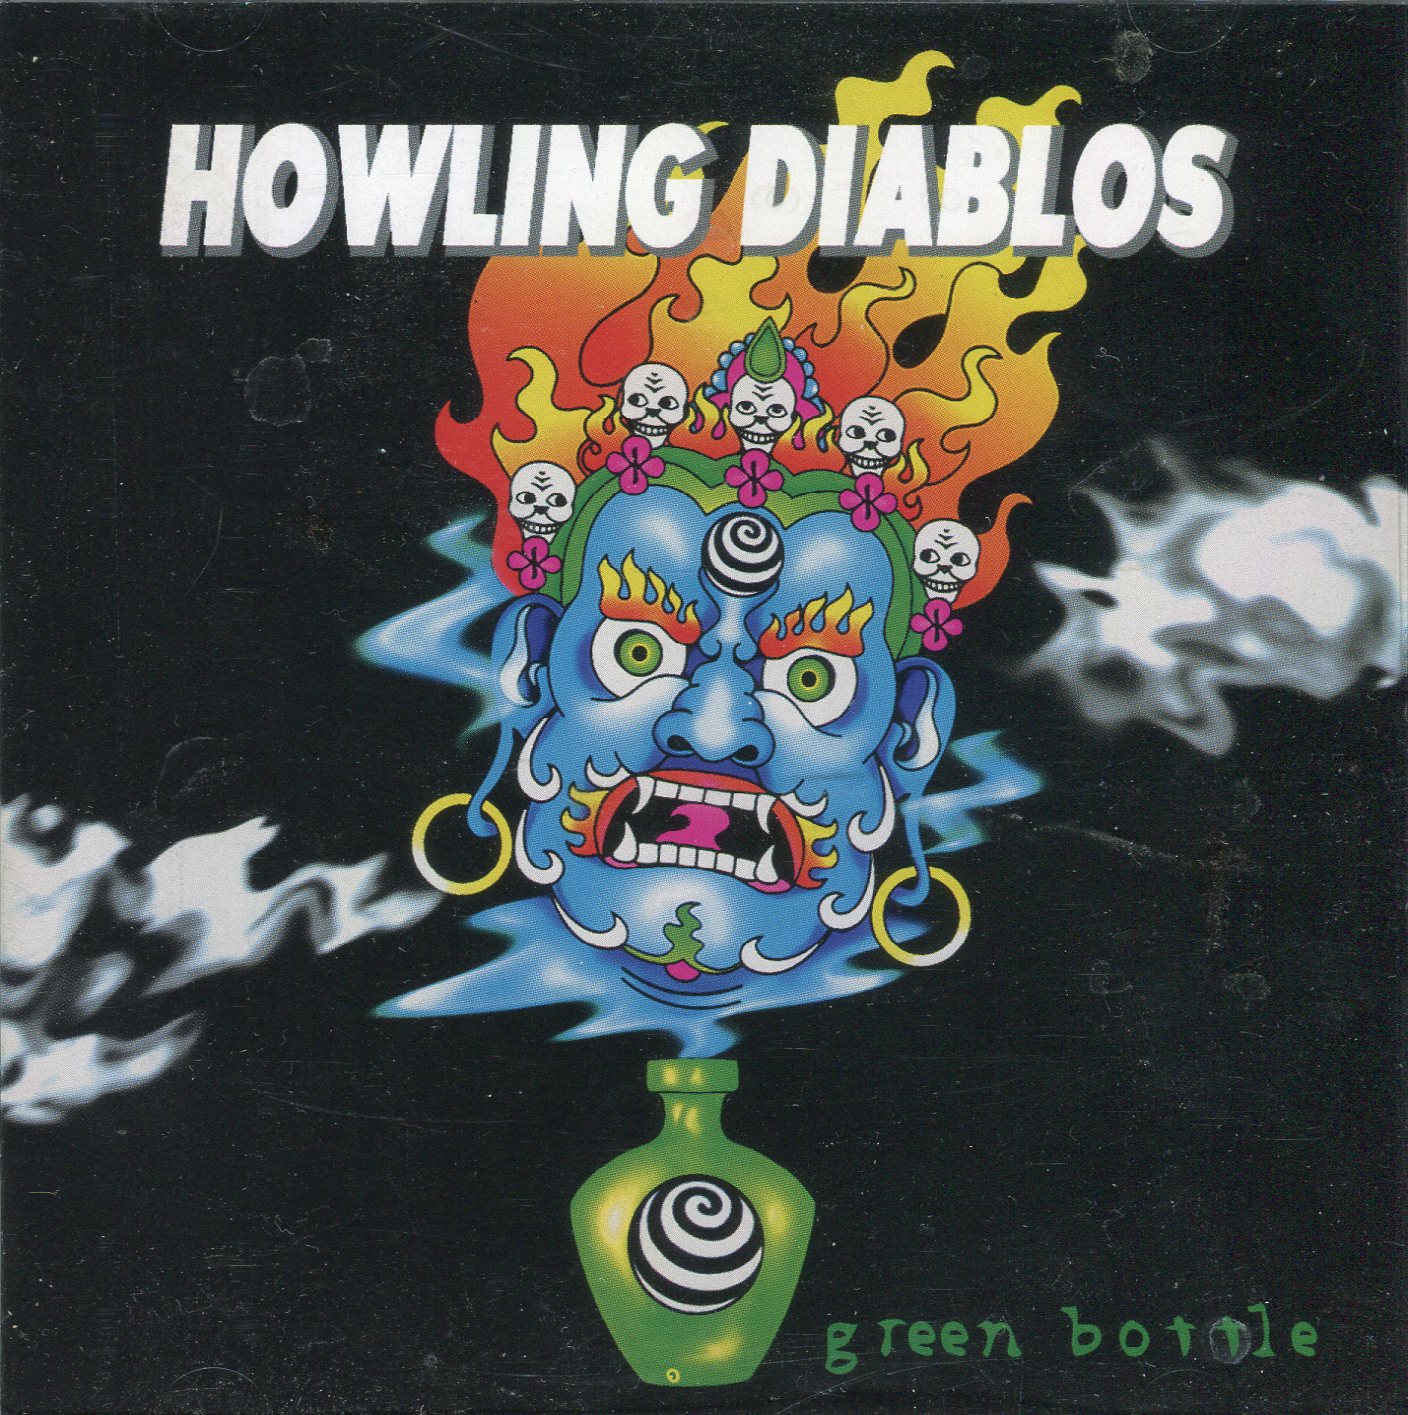 The Howling Diablos - Green Bottle (album)